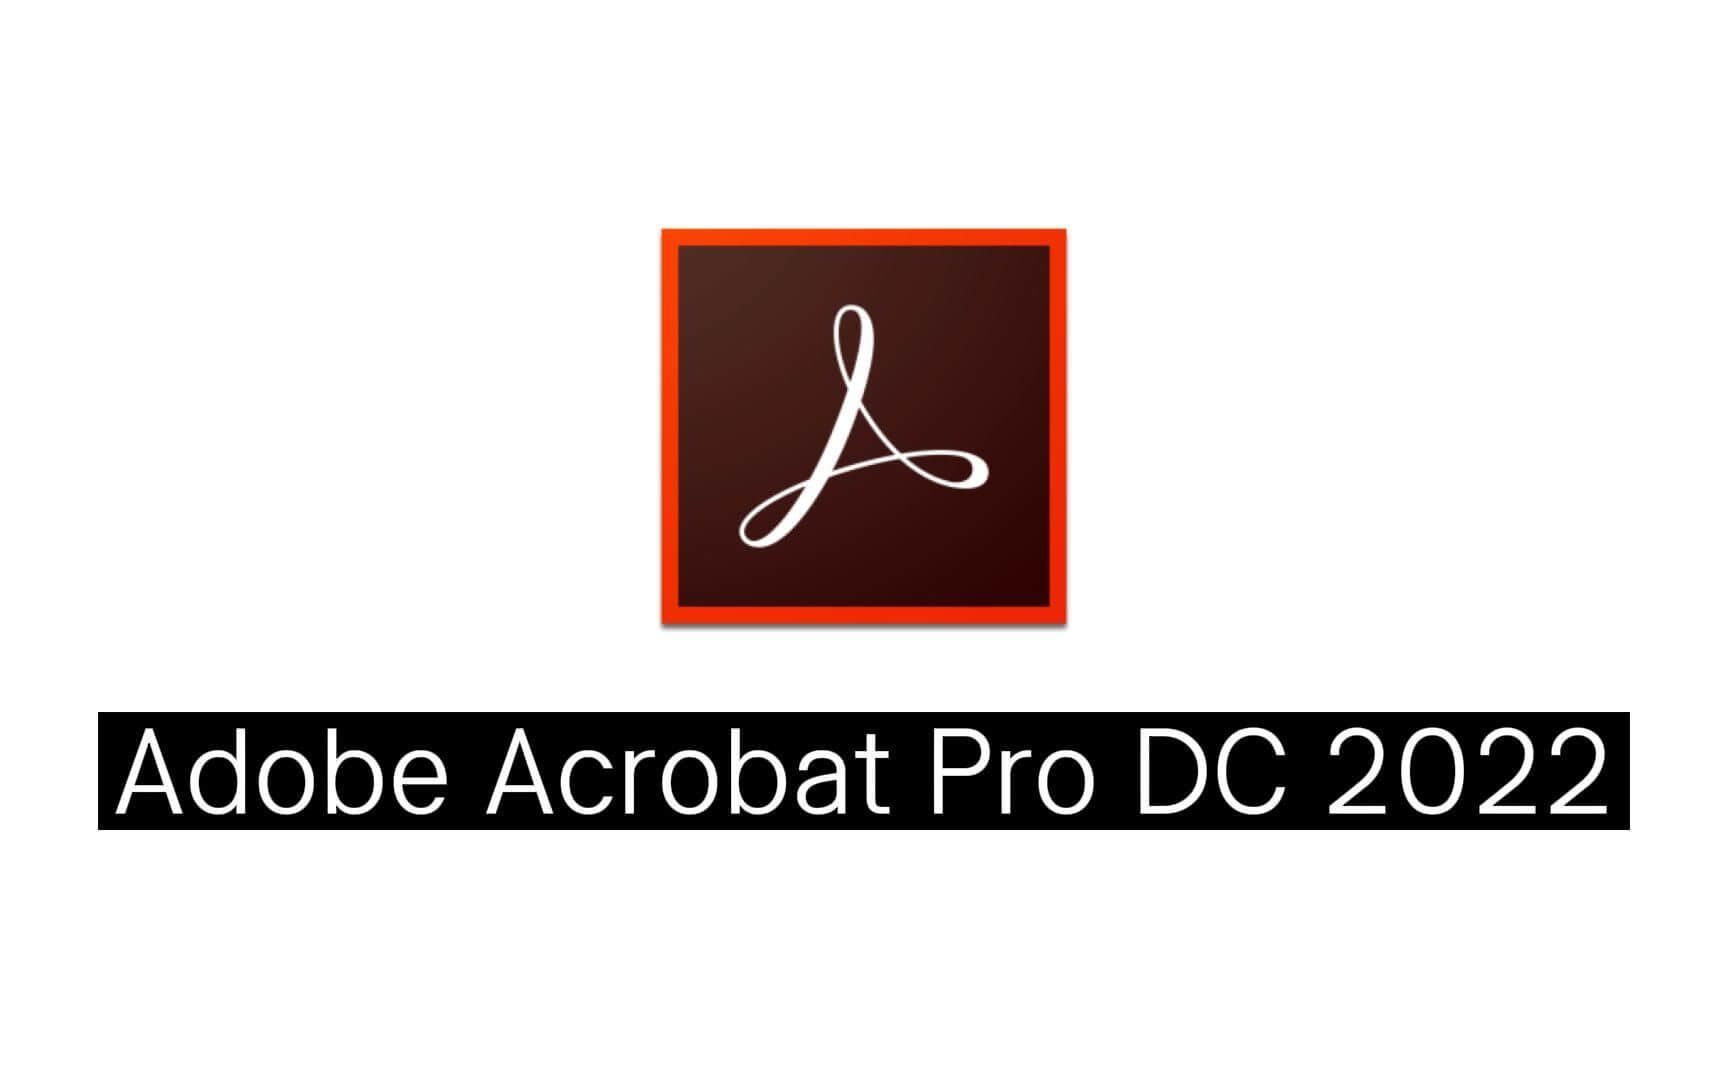  Adobe Acrobat Pro DC 2022 软件分享